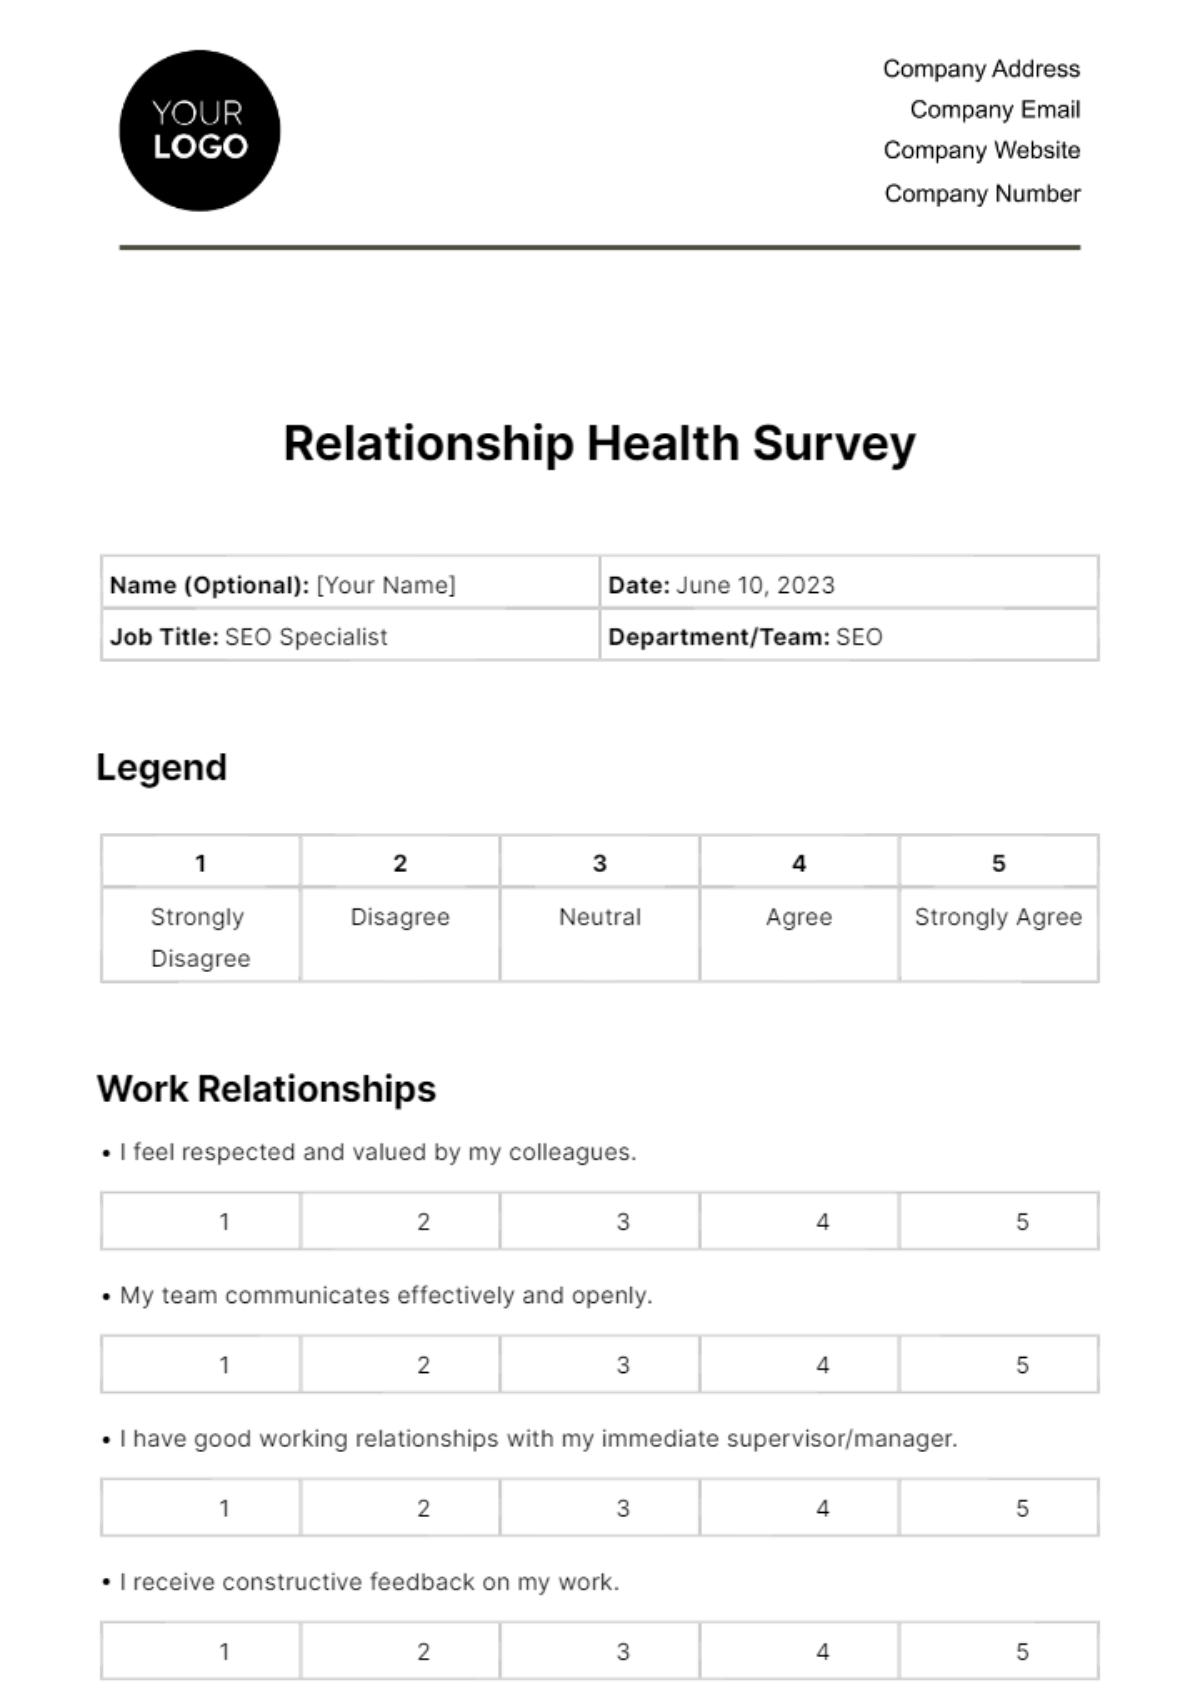 Free Relationship Health Survey HR Template